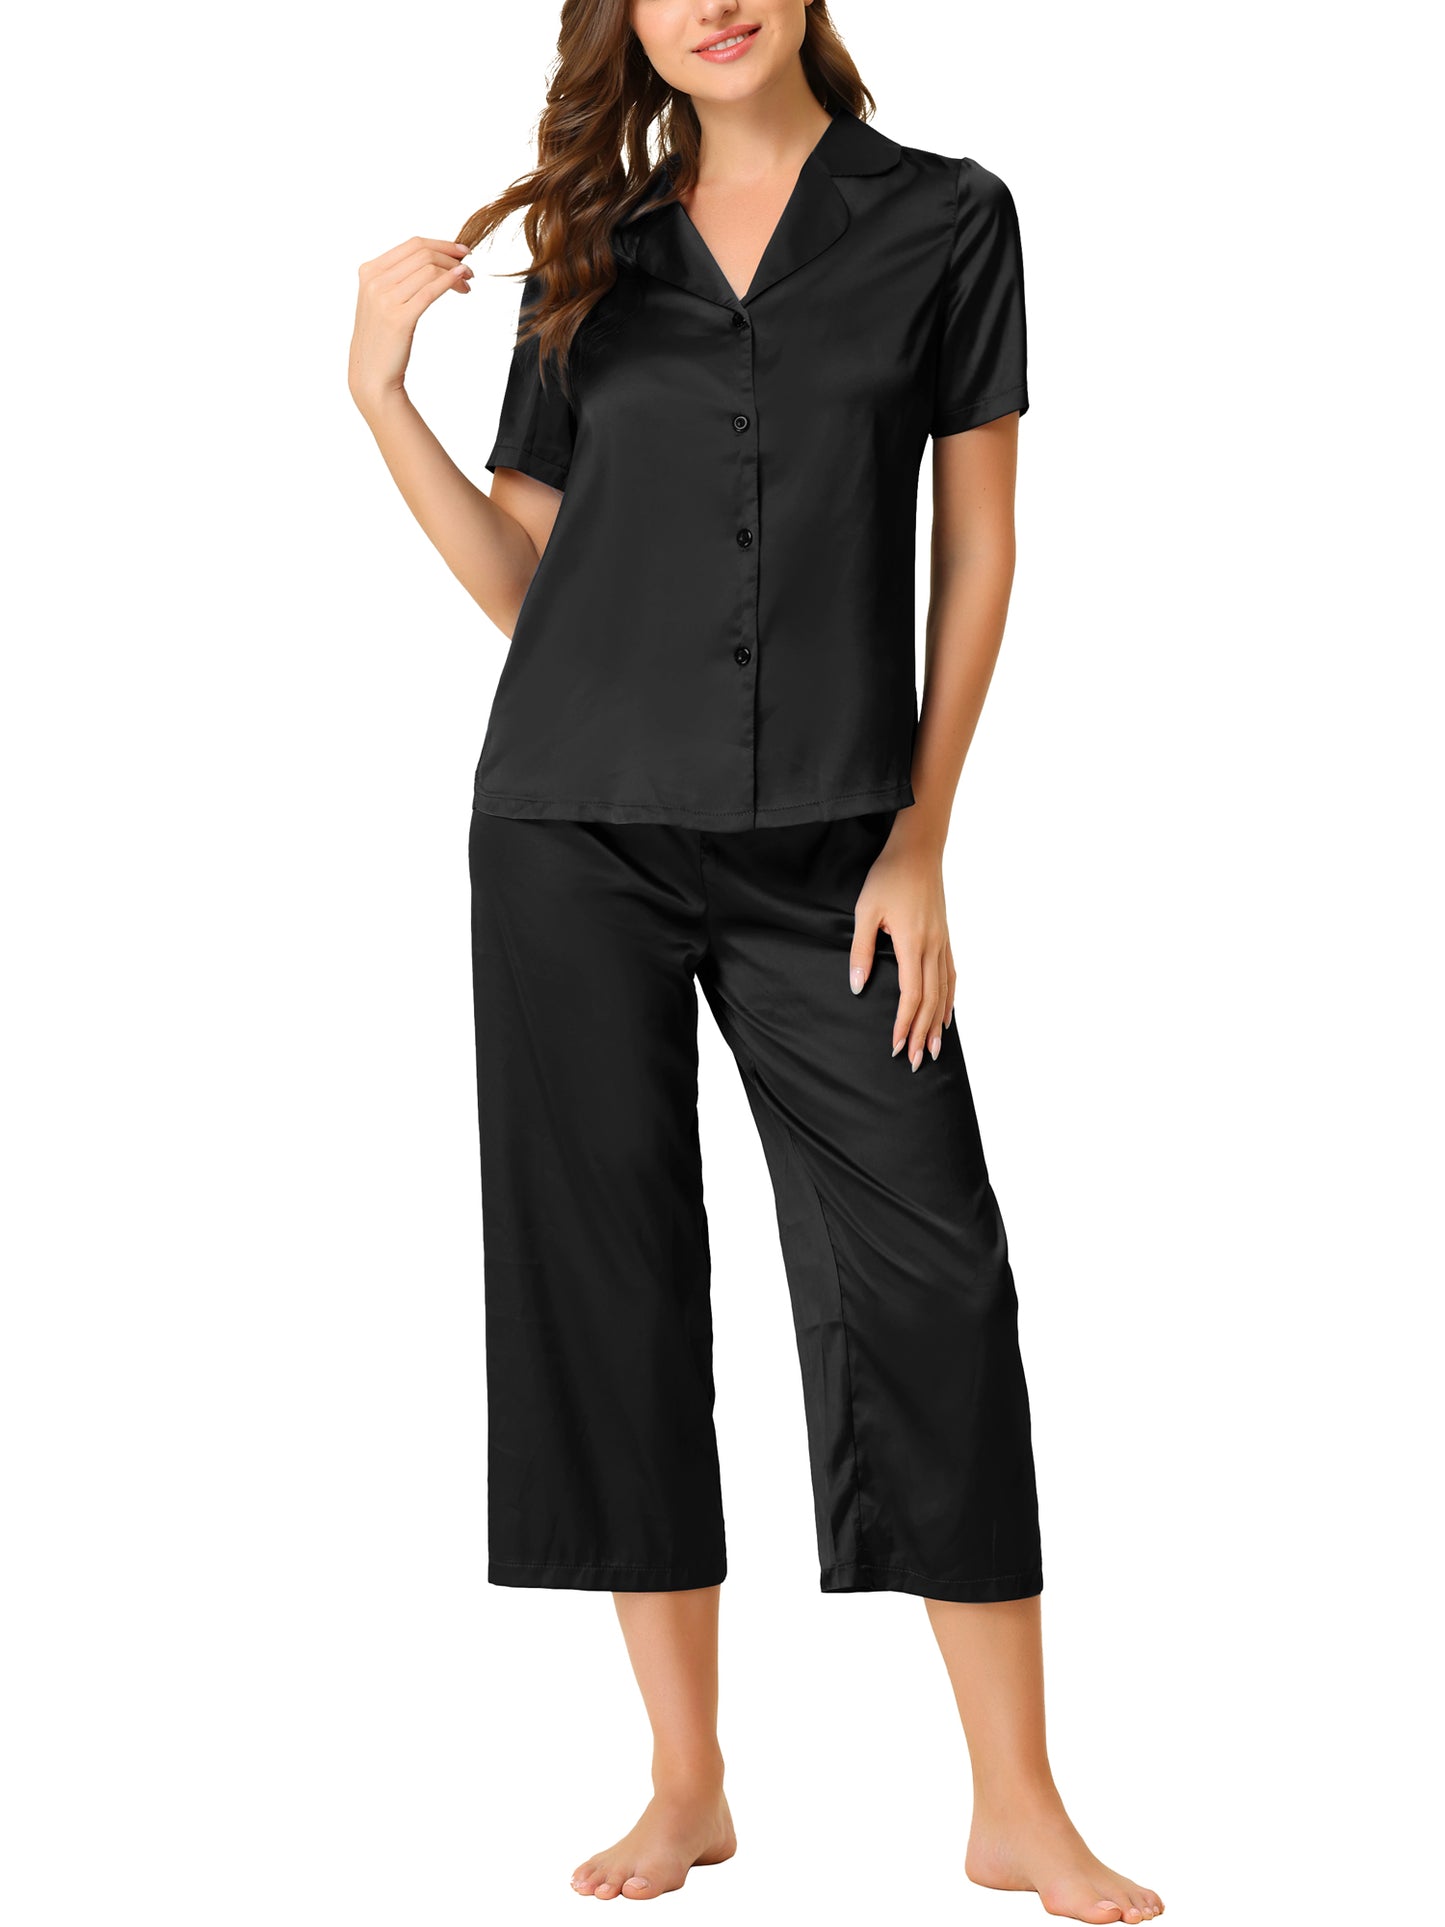 cheibear Pajama Loungewear Tops and Capri Pants Satin Sets Black